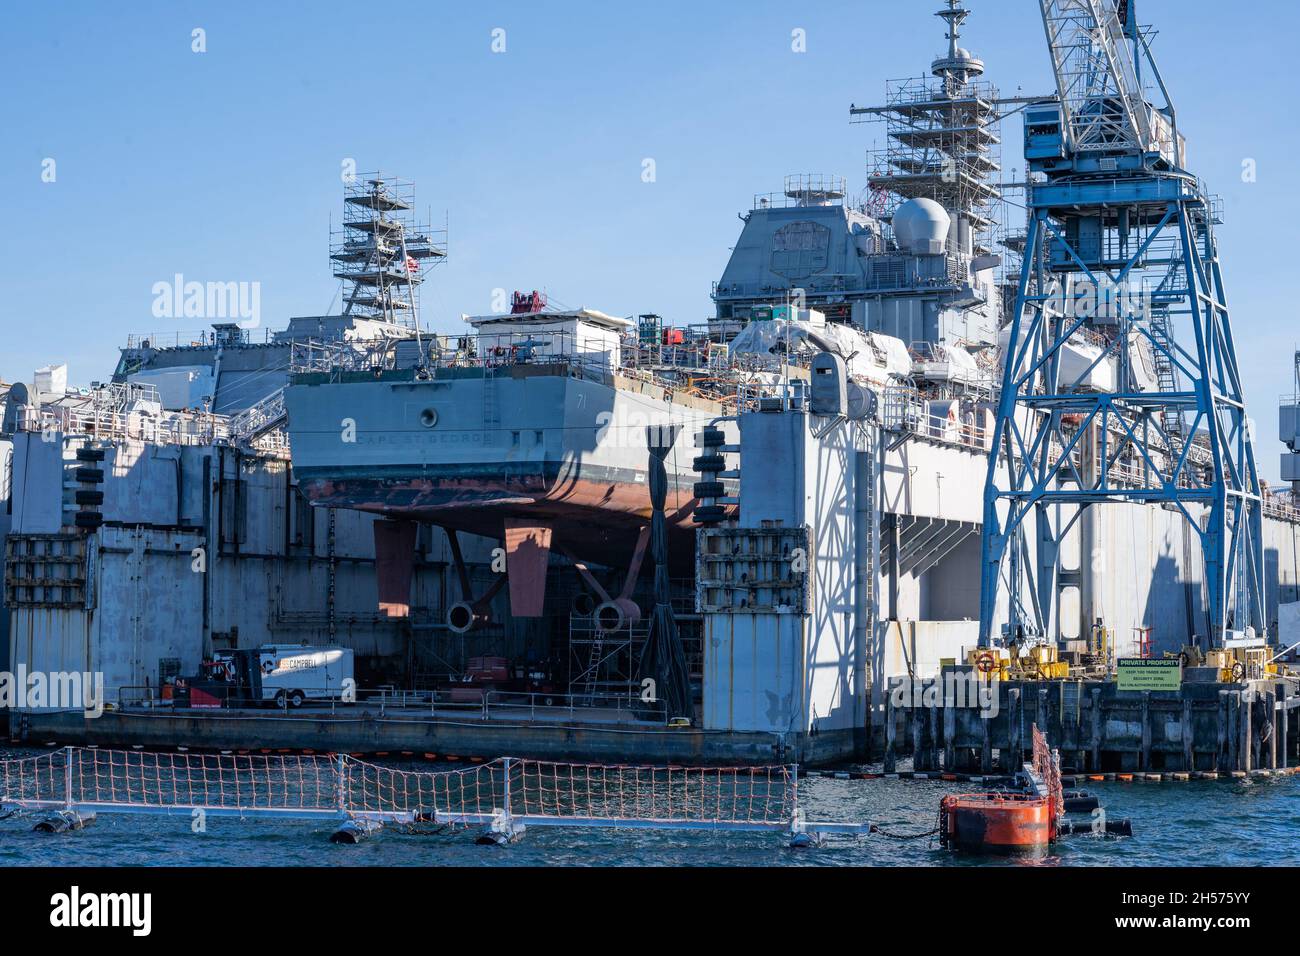 Seattle, WA - USA - Sept. 23, 2021: Horizontal view the USS Cape St. George, a Ticonderoga-class cruiser, undergoing a “long-term” repair and maintena Stock Photo